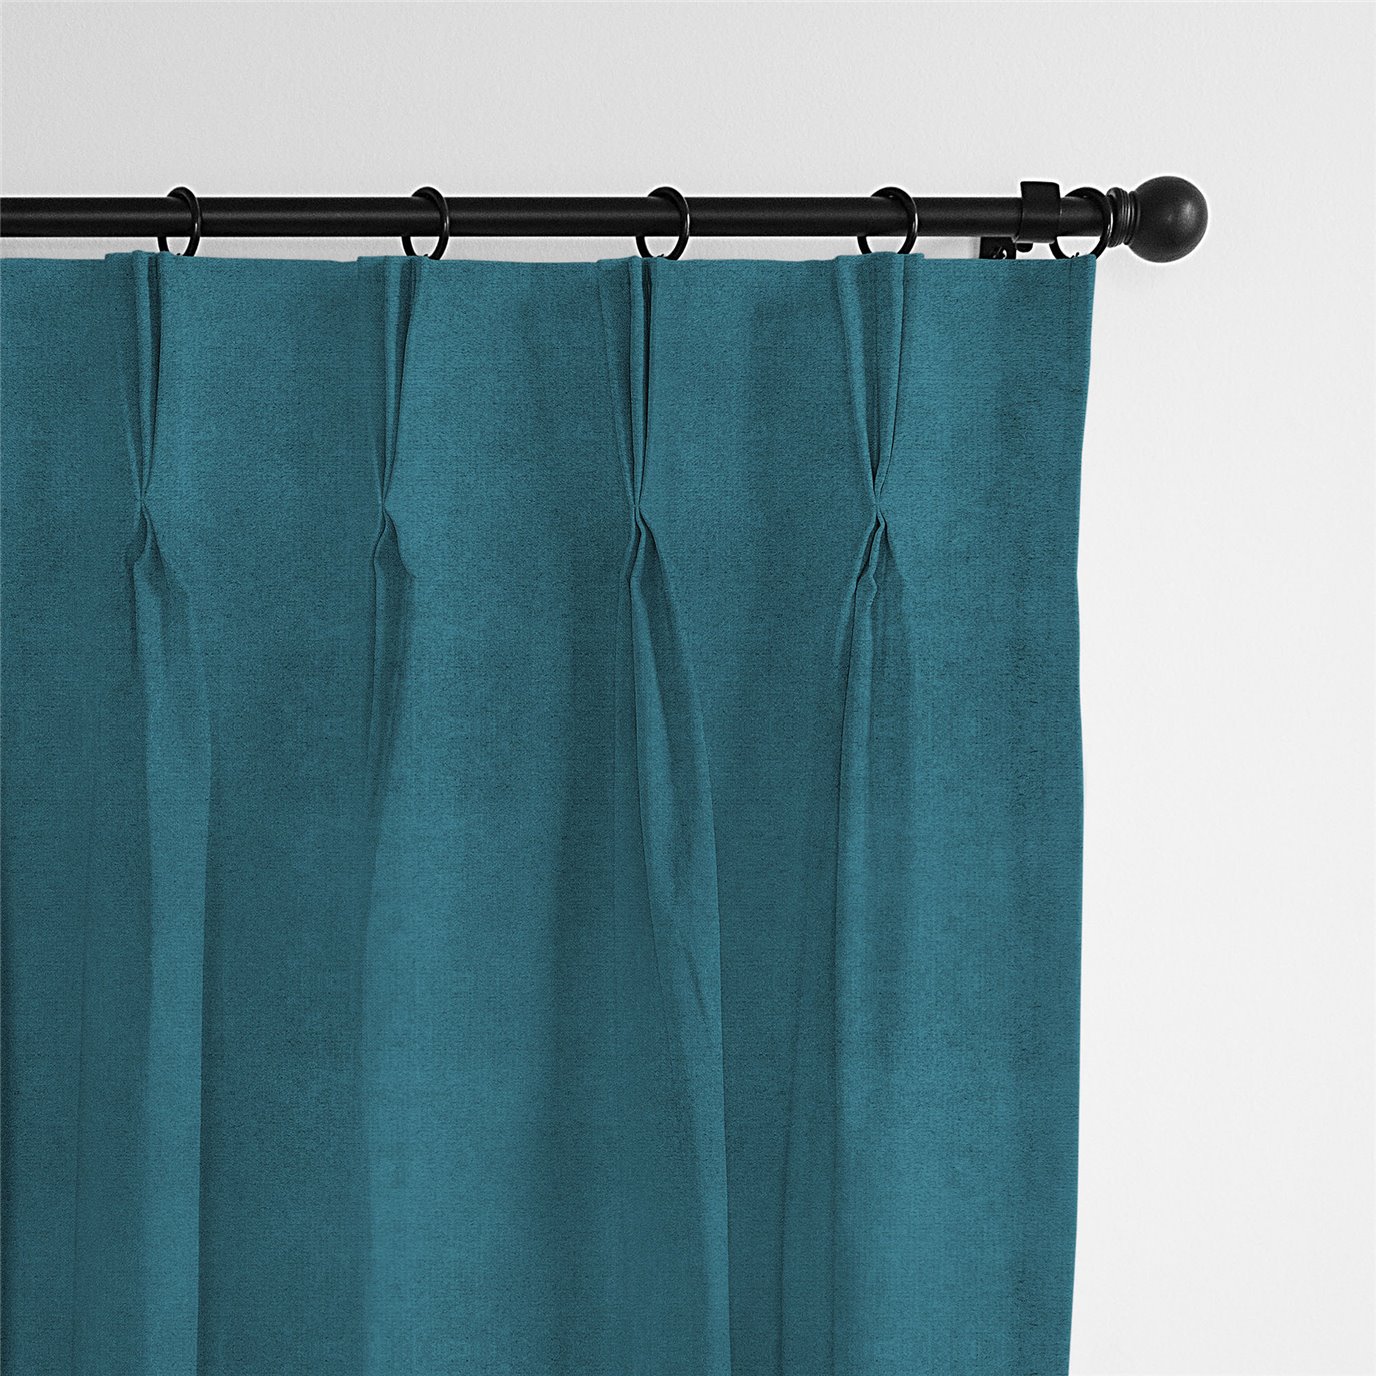 Vanessa Turquoise Pinch Pleat Drapery Panel - Pair - Size 40"x132"